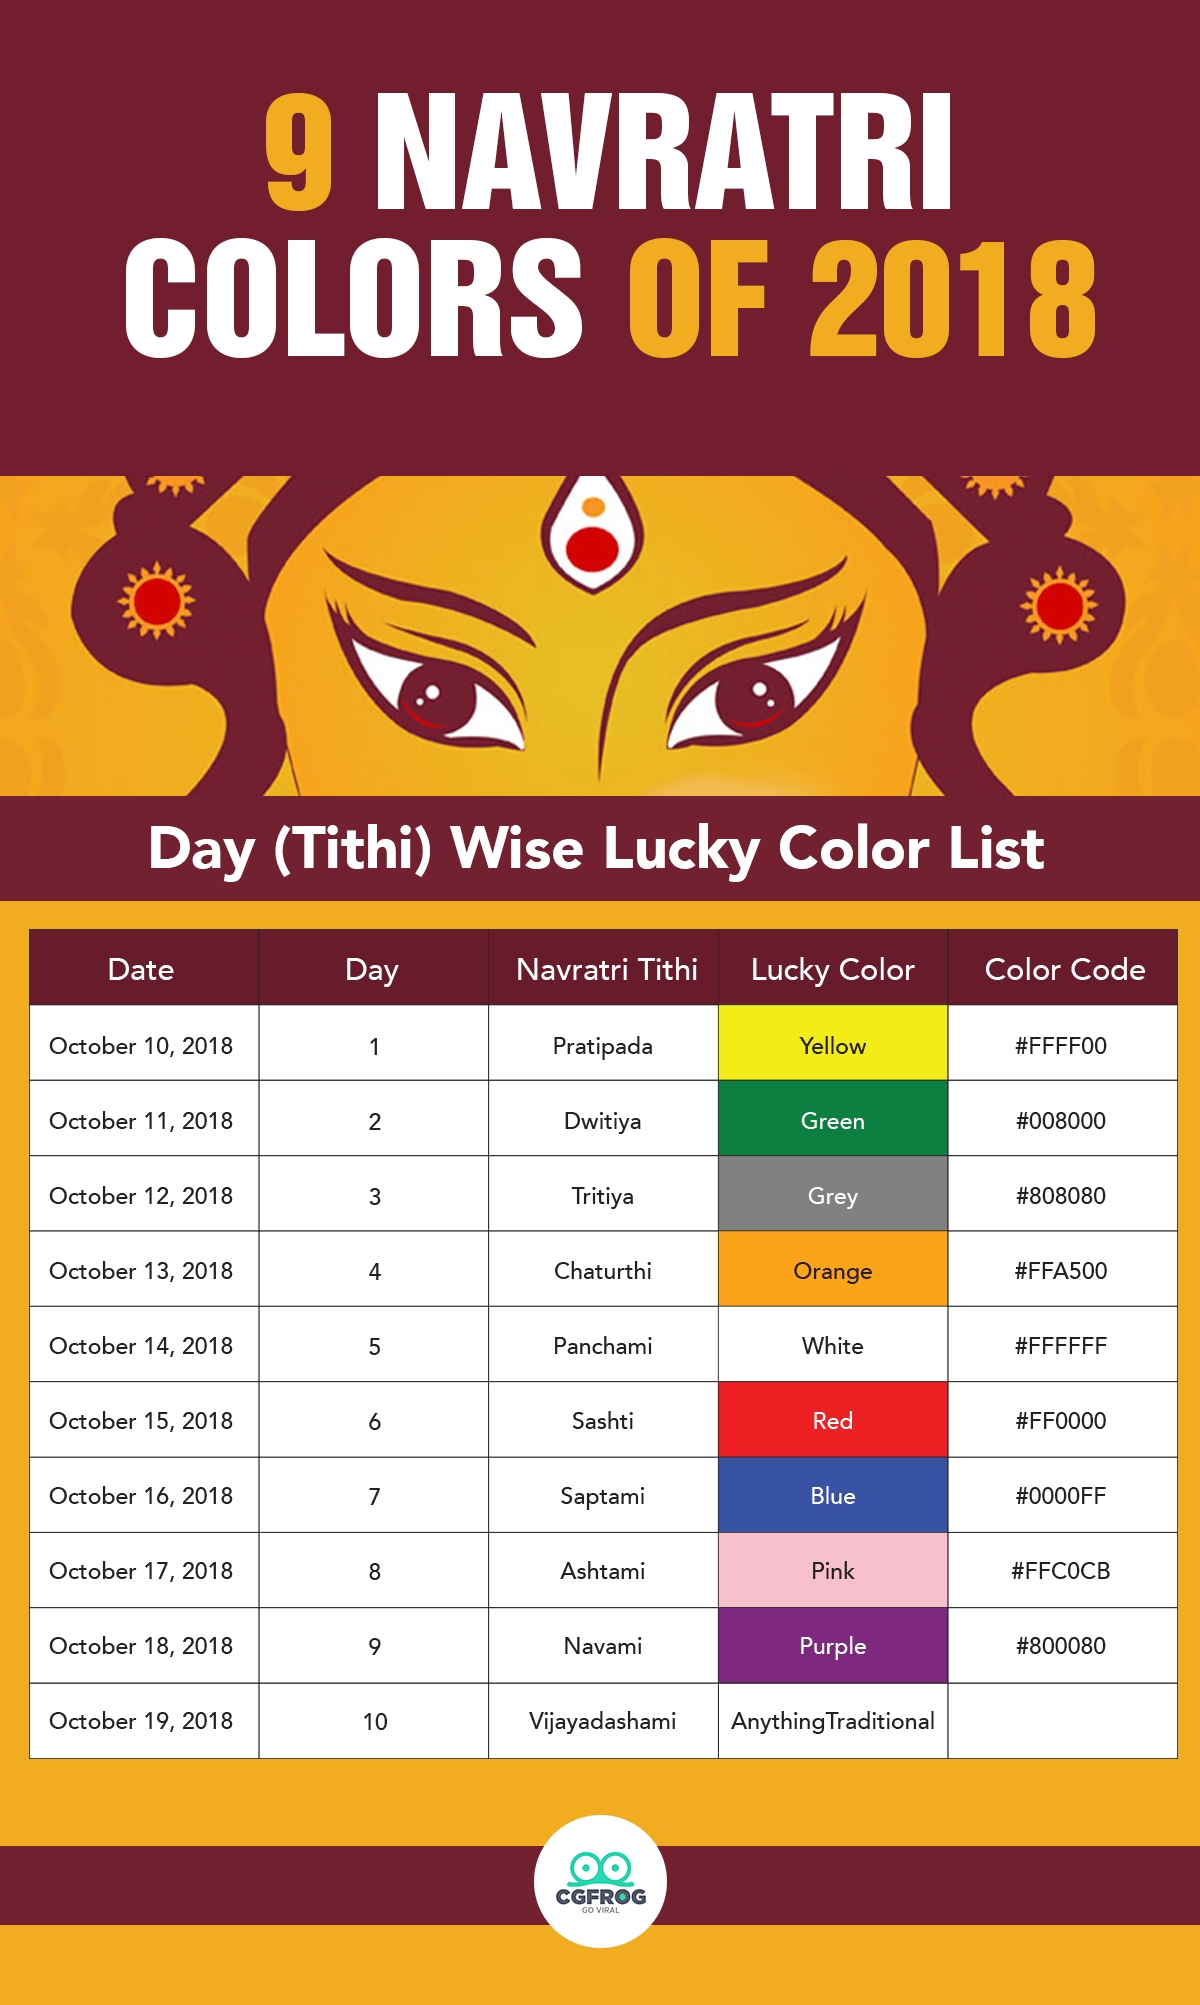 Navratri 2018: Wishes, Images, Wallpaper, Photos Of Durga  Color Code For Navaratri